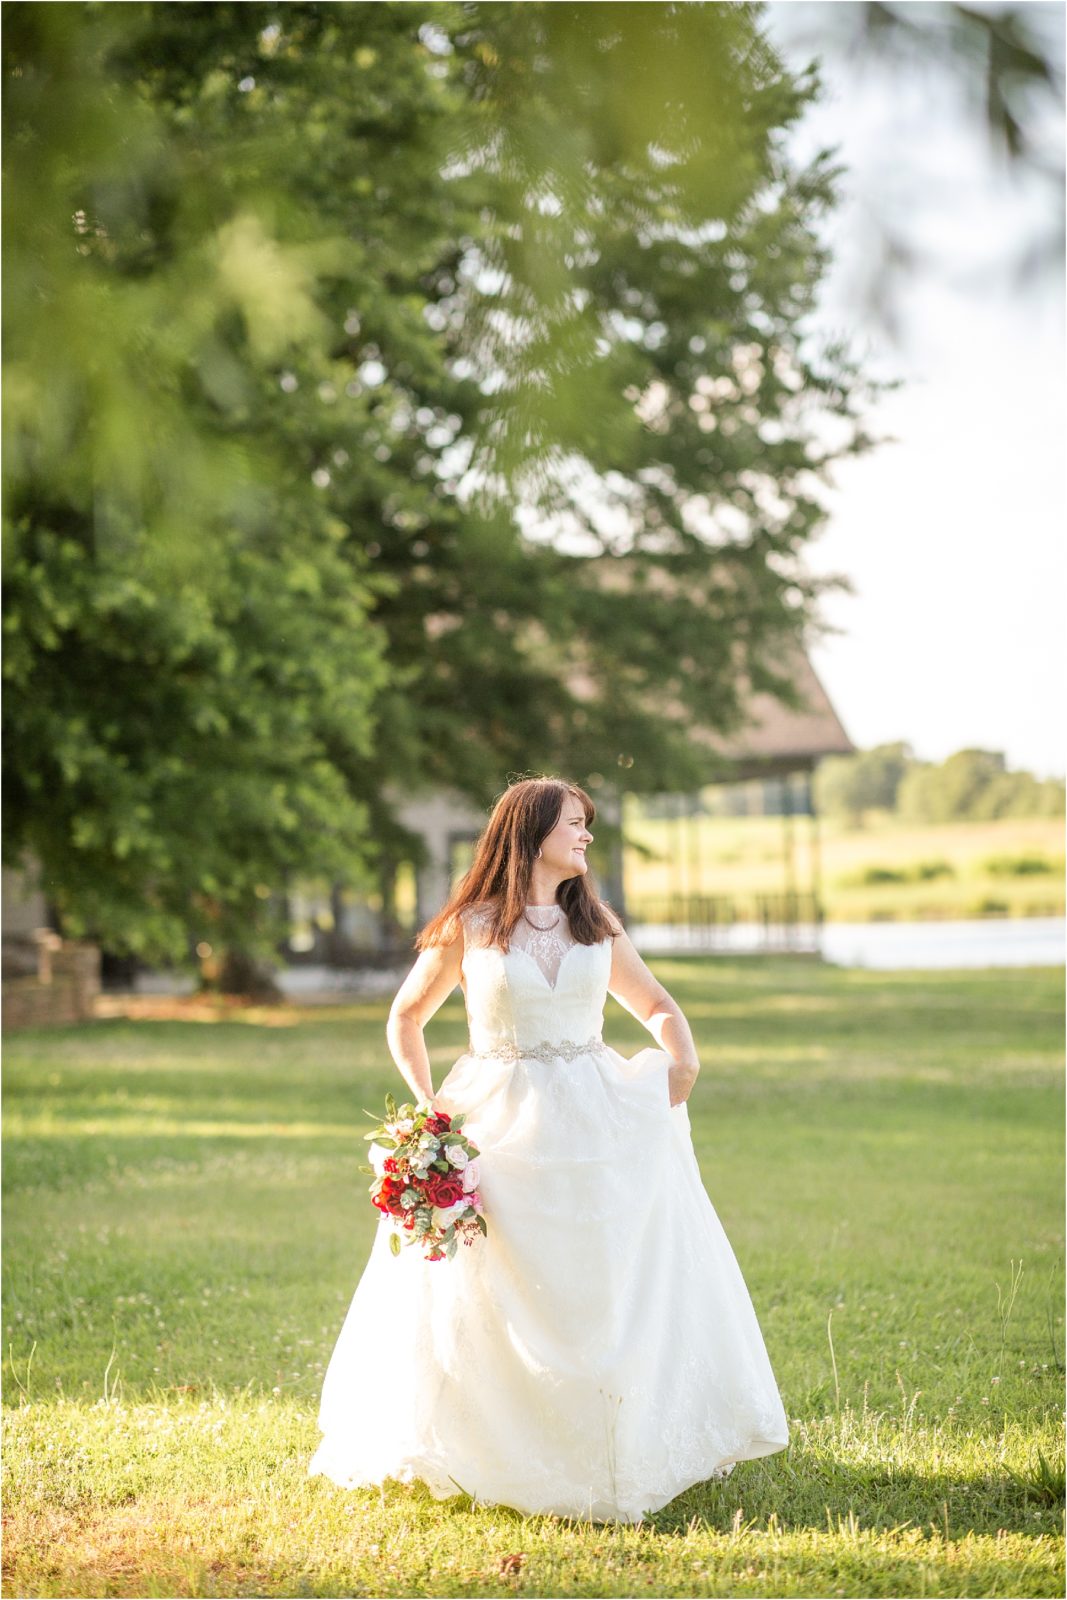 Wedding bride walking with dress in hands in field